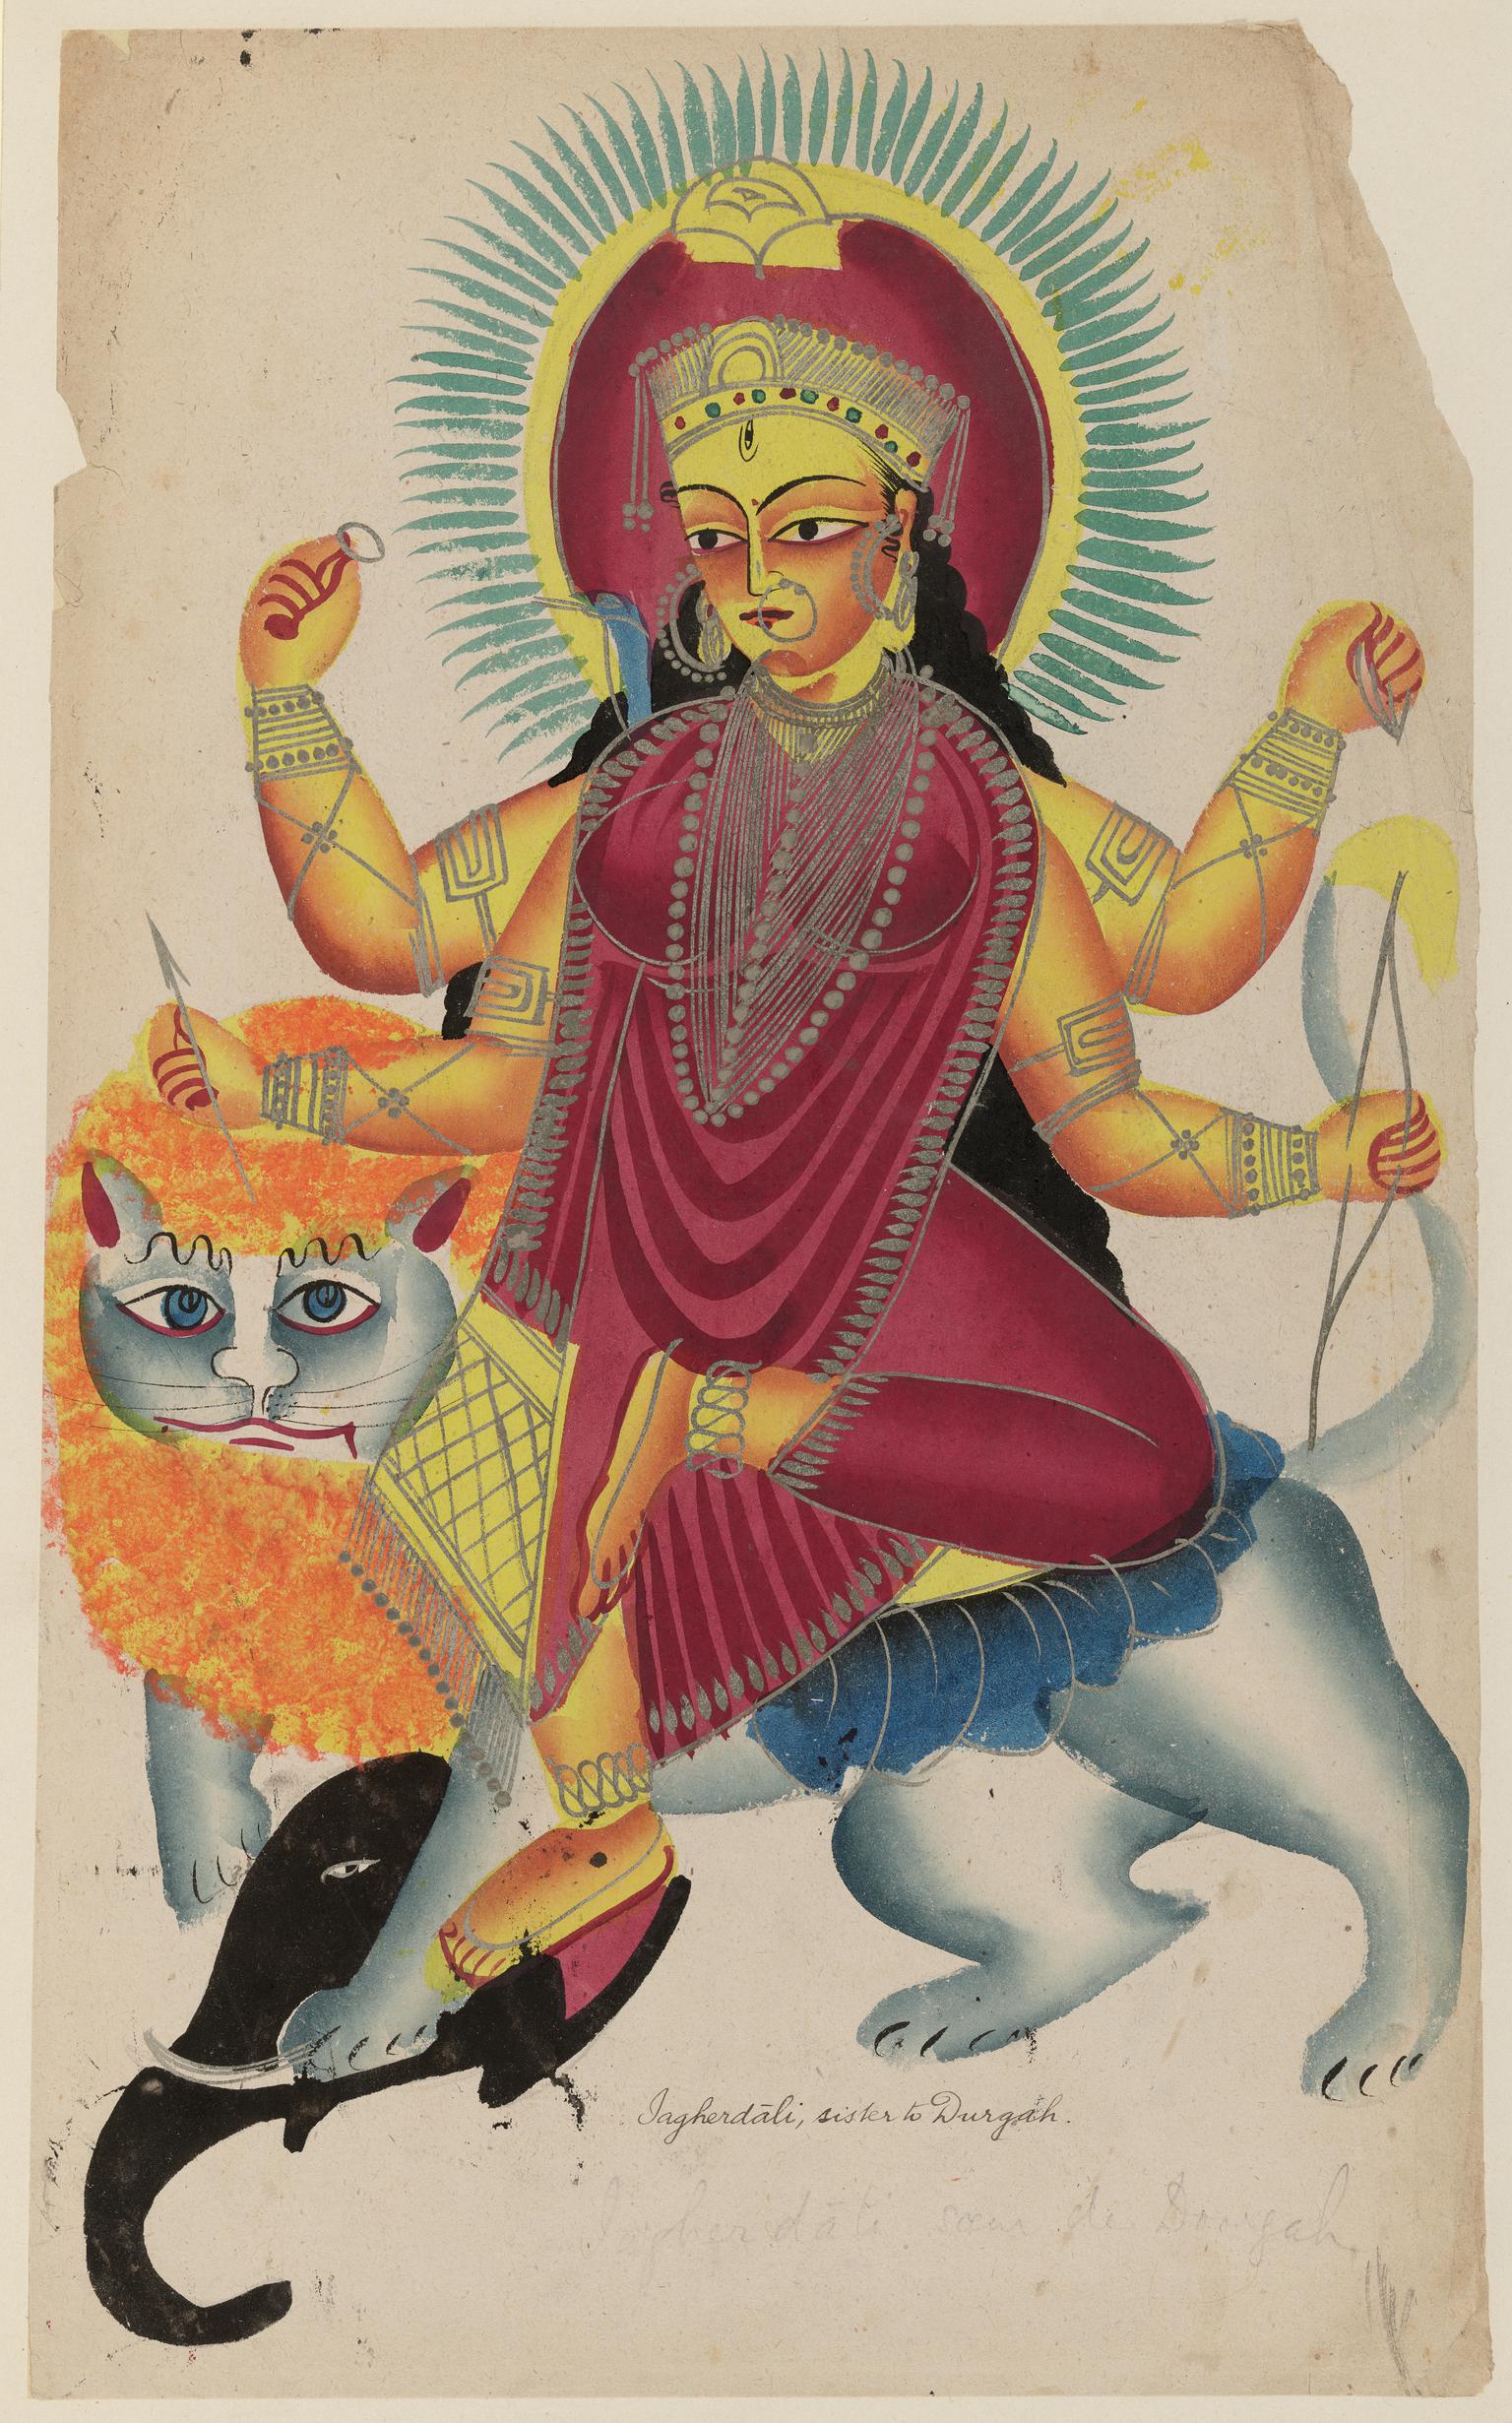 Durga riding her lion